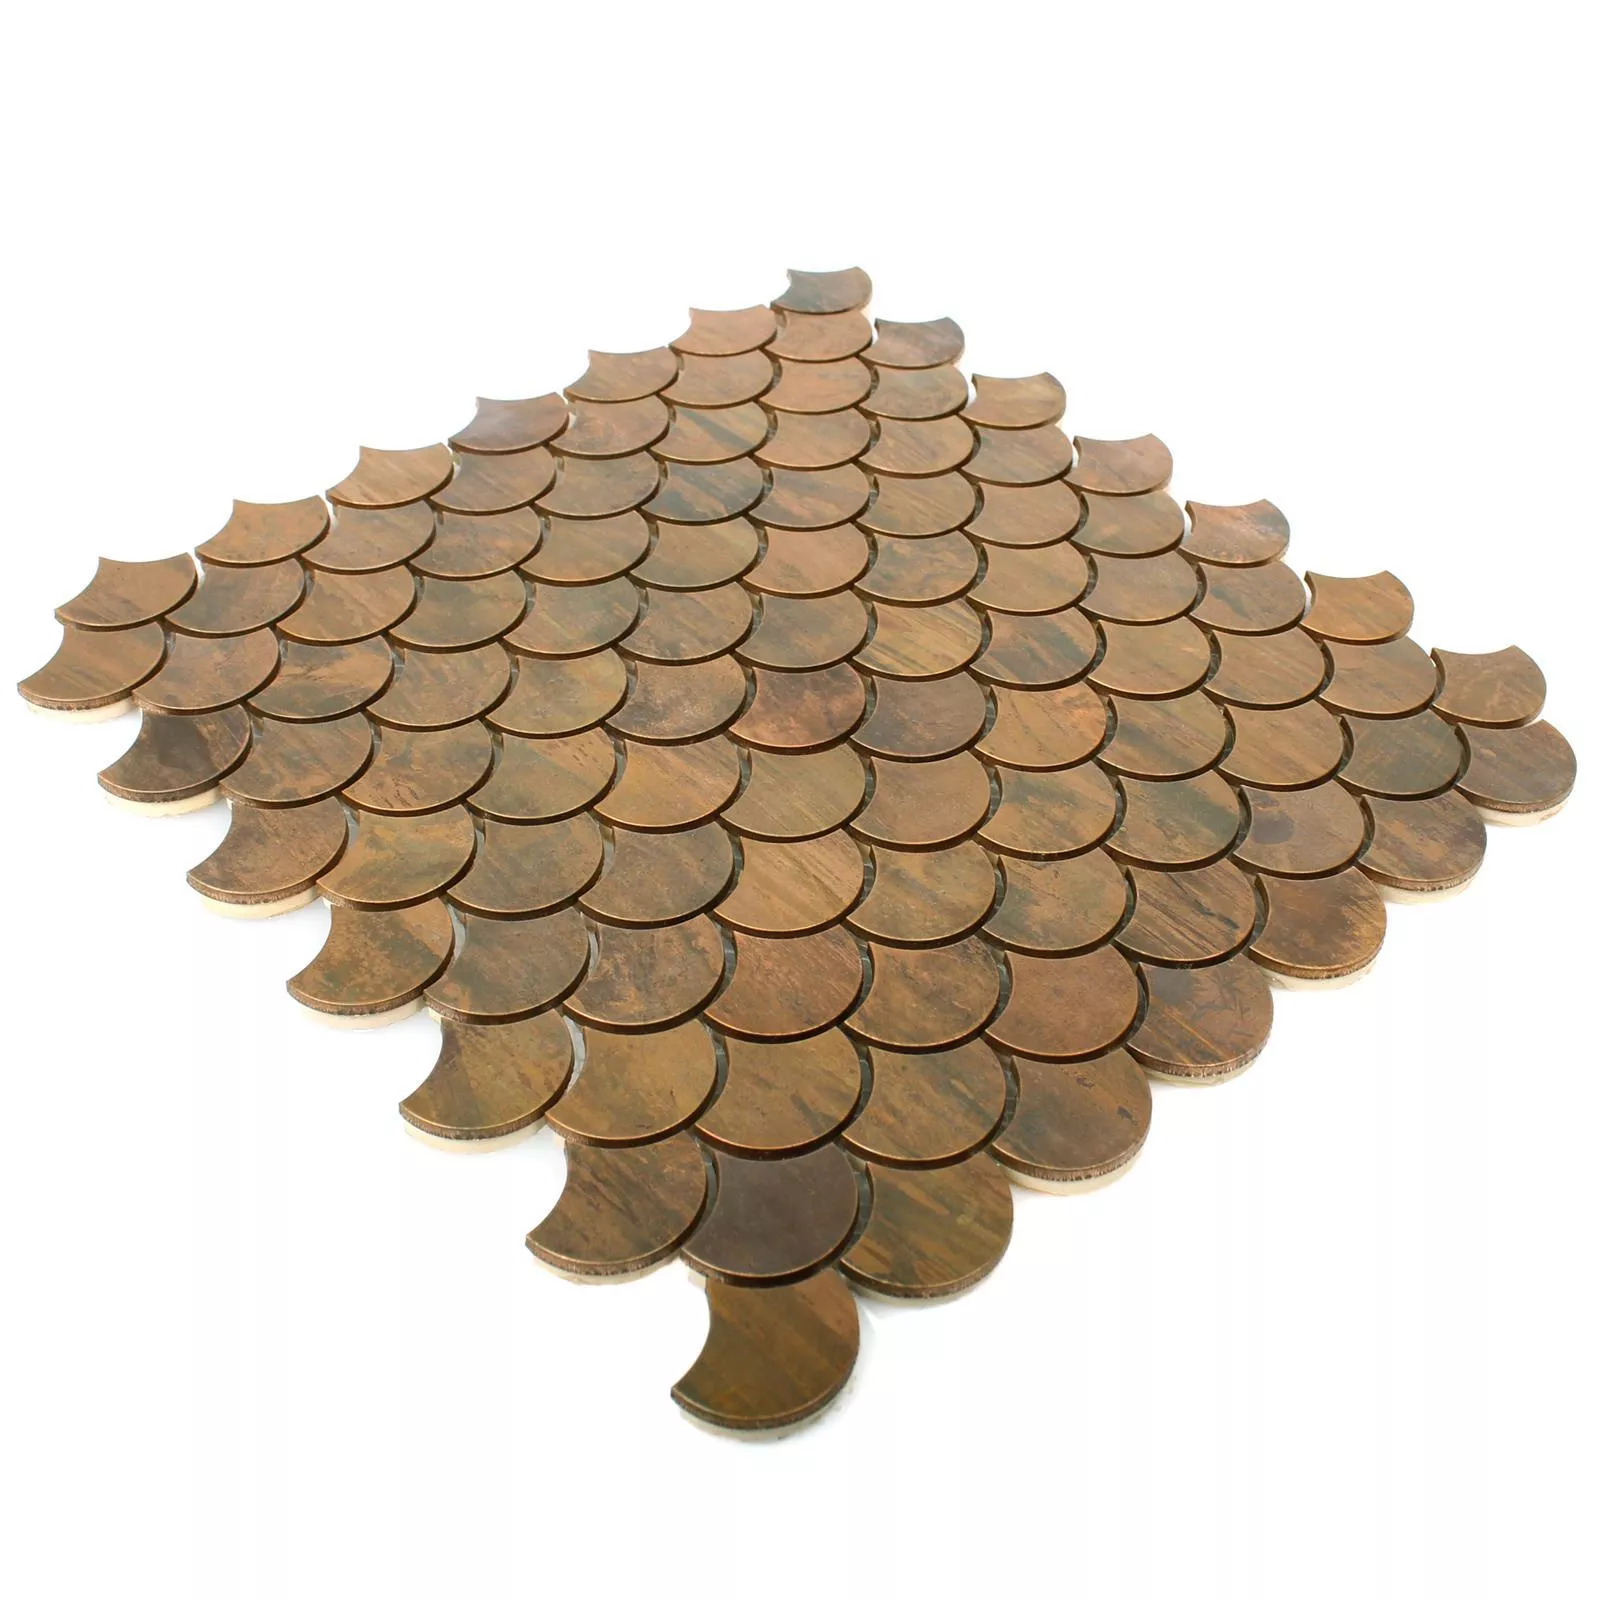 Sample Metal Copper Mosaic Tiles Myron Scale Form